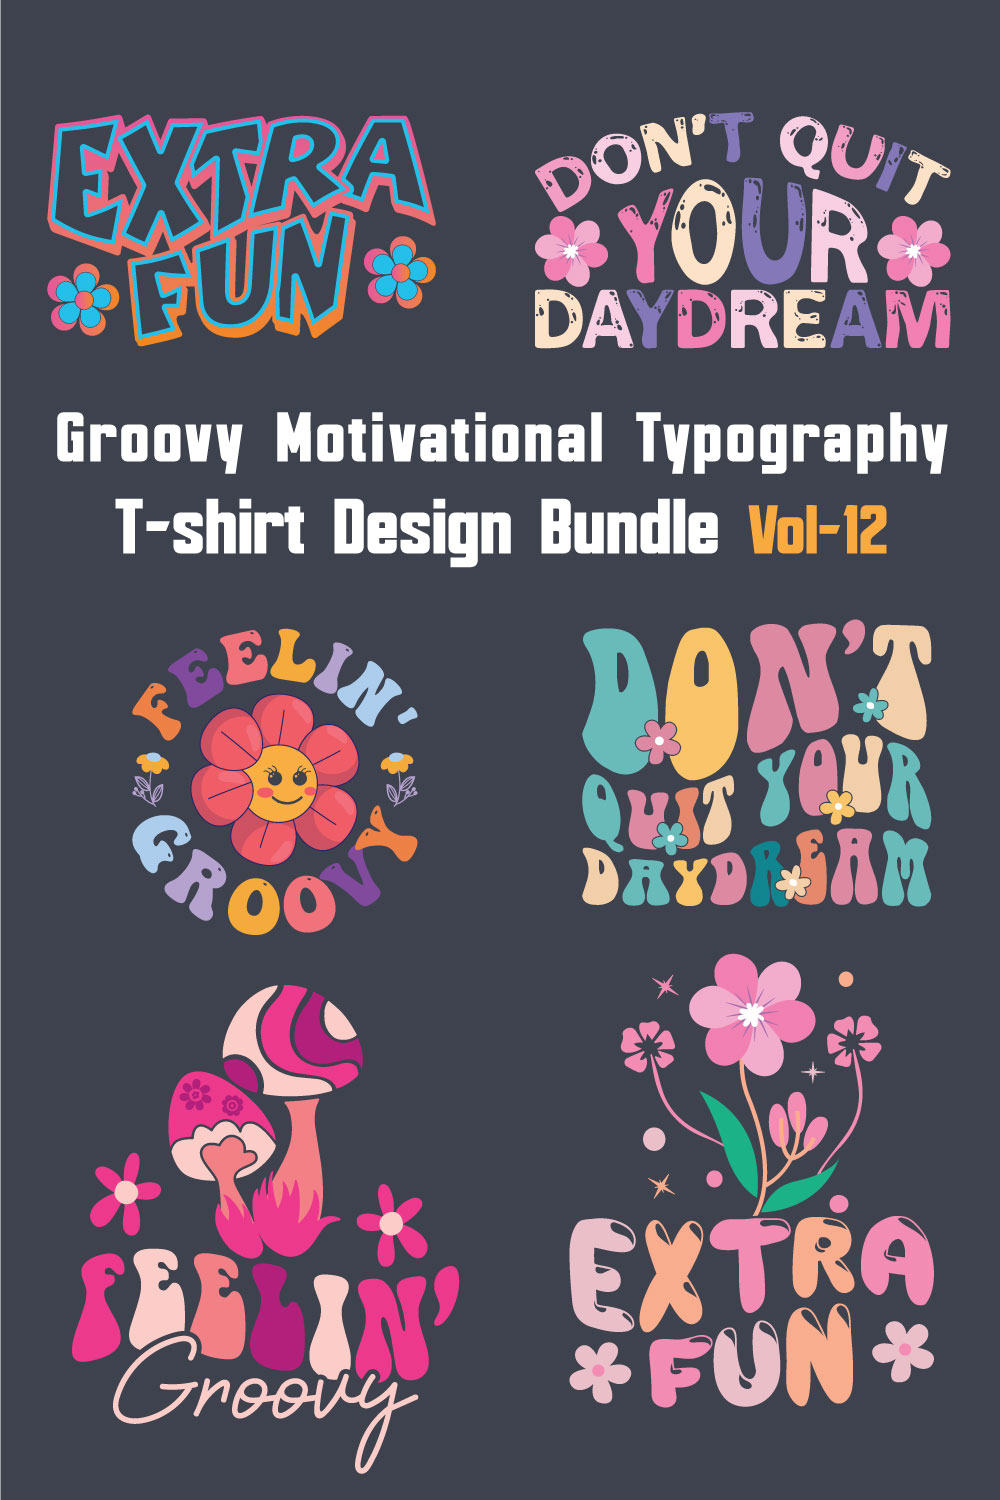 Groovy Motivational Typography T-shirt Design Bundle Vol-12 pinterest preview image.